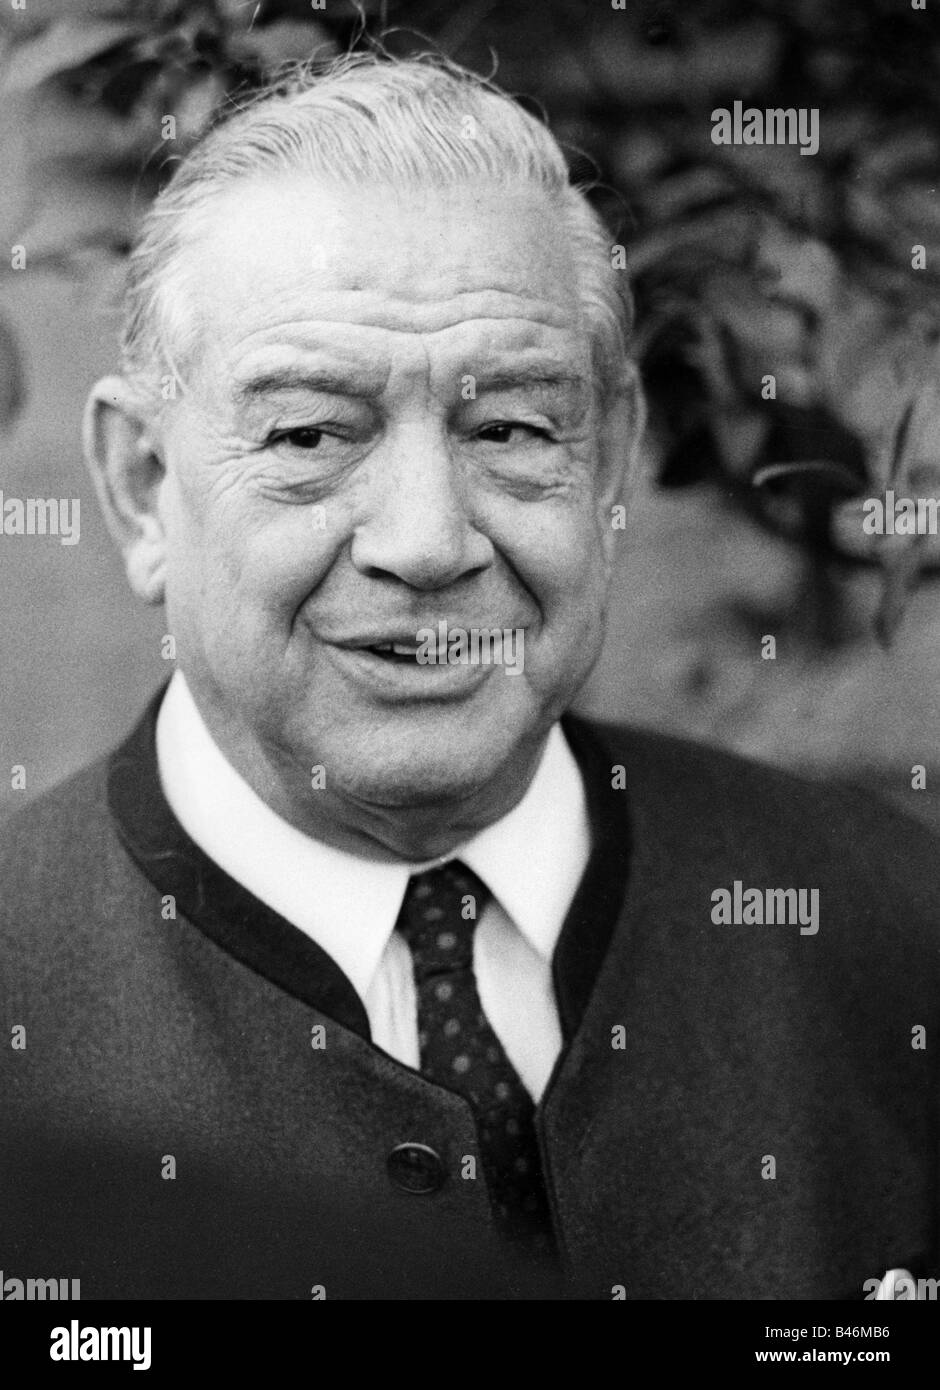 Goppel, Alfons, 1.10.1905 - 24 12.1991, German politician (CSU), Prime Minister of Bavaria 11.12.1962 - 7.11.1978, Portrait, 1970s, , Stock Photo